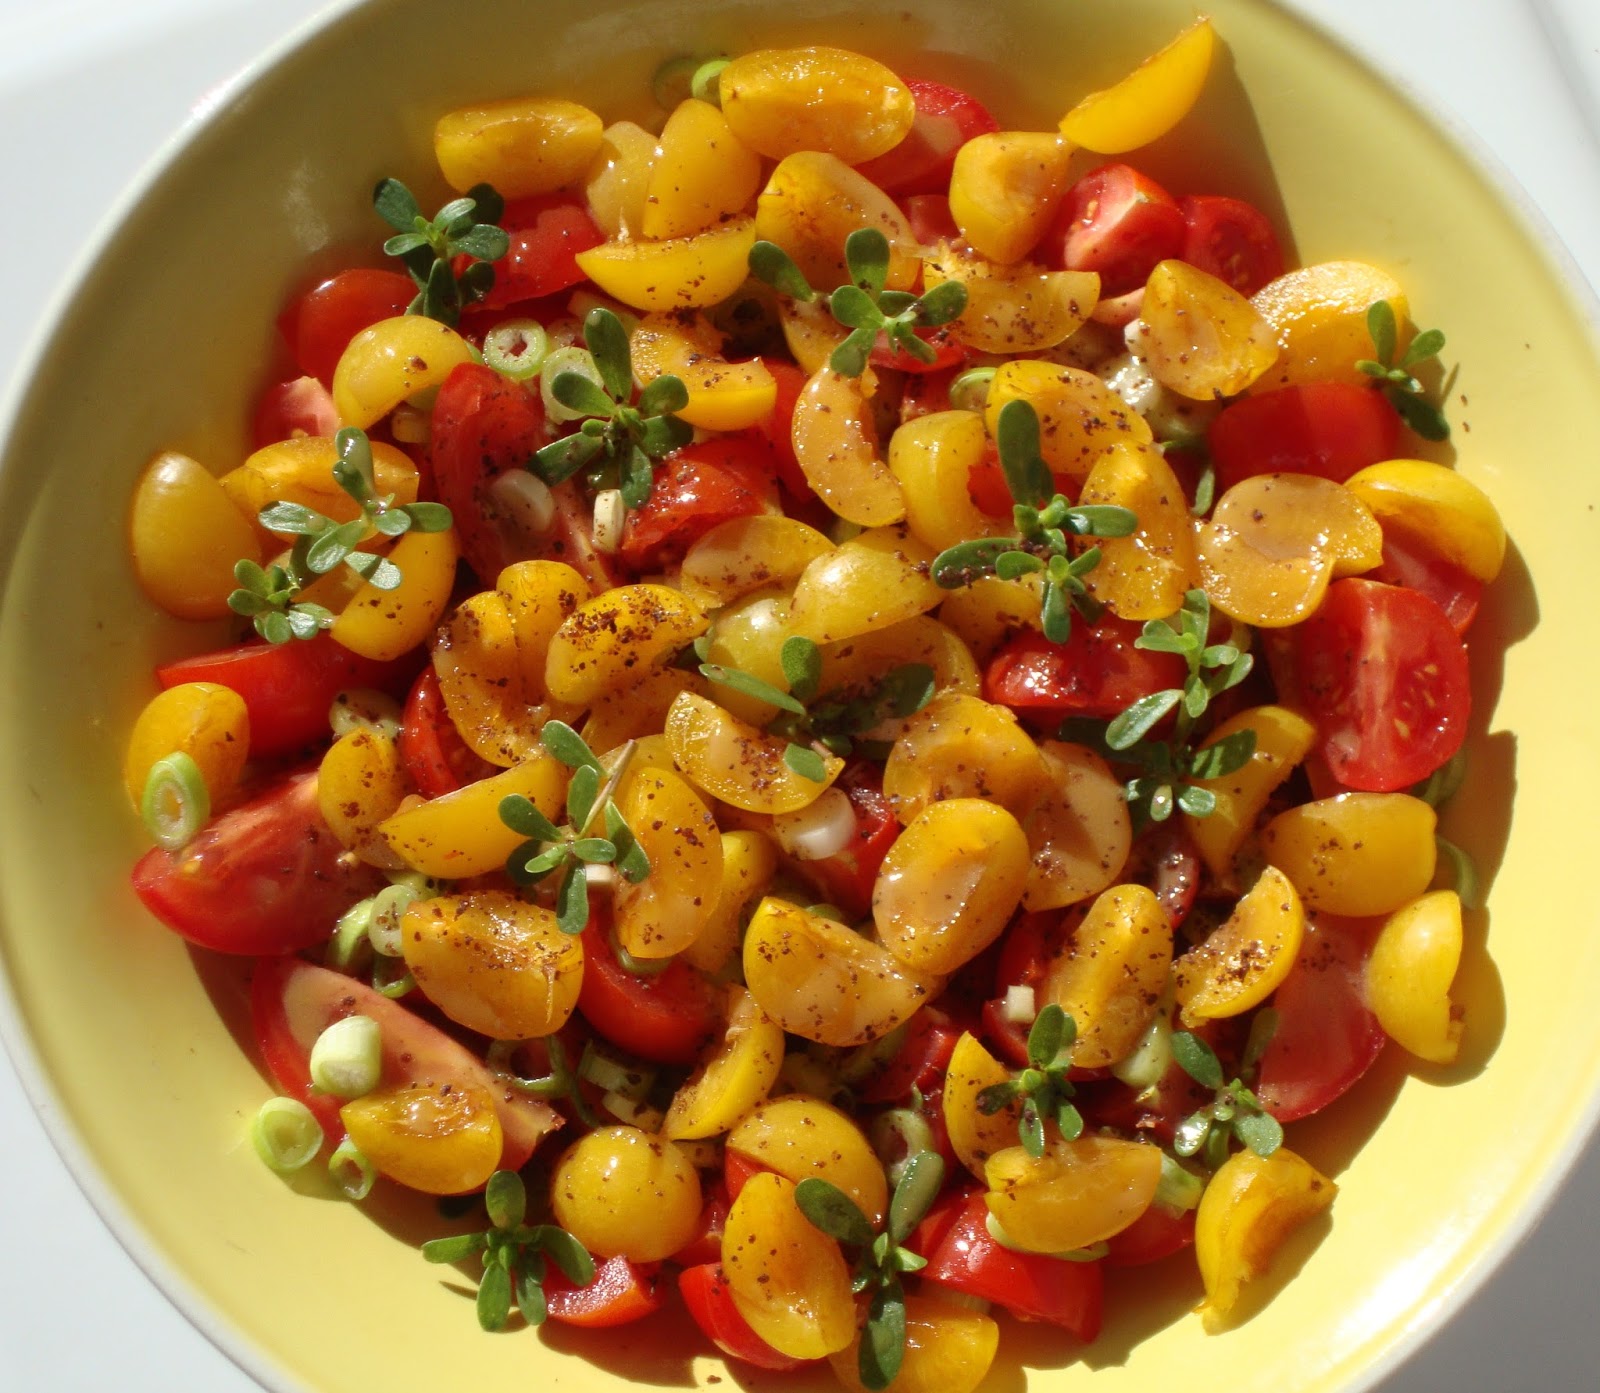 Cooketteria: Tomaten-Mirabellen-Salat mit Sesamdressing